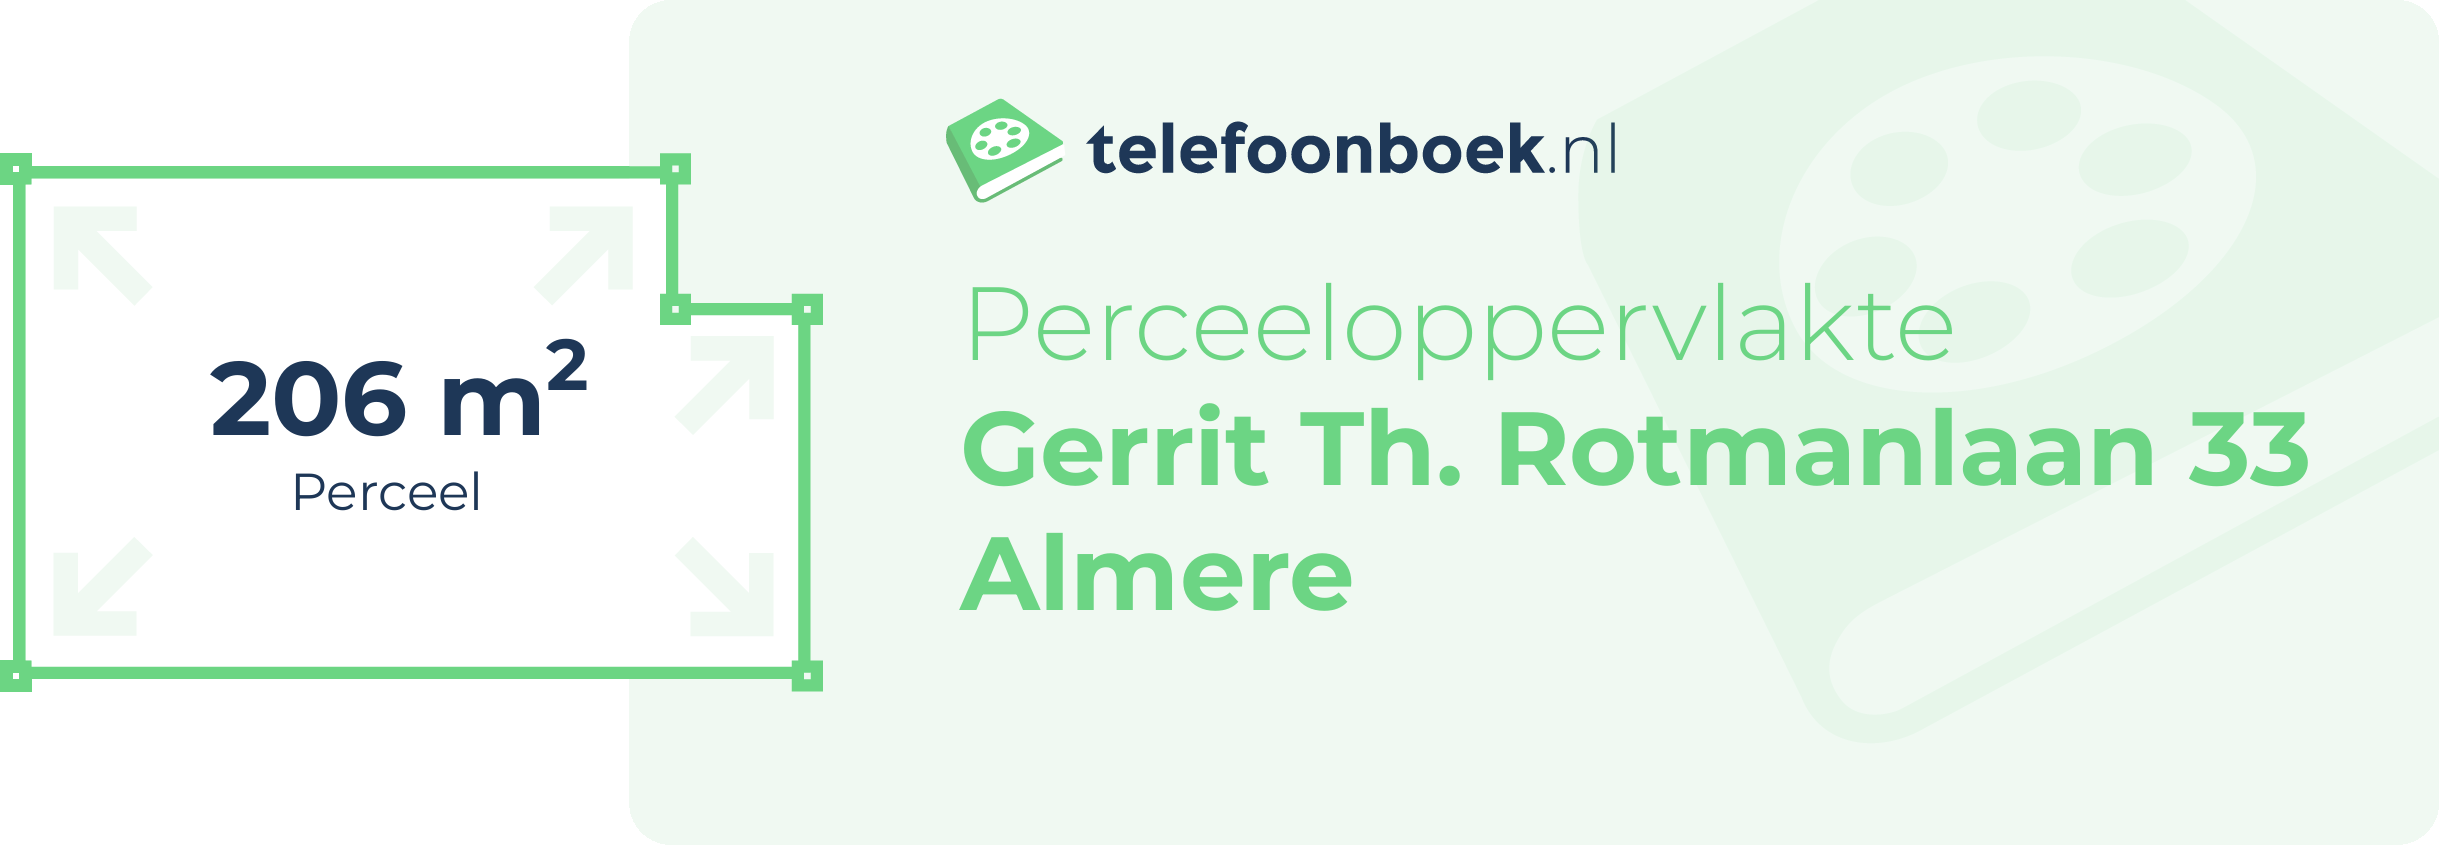 Perceeloppervlakte Gerrit Th. Rotmanlaan 33 Almere